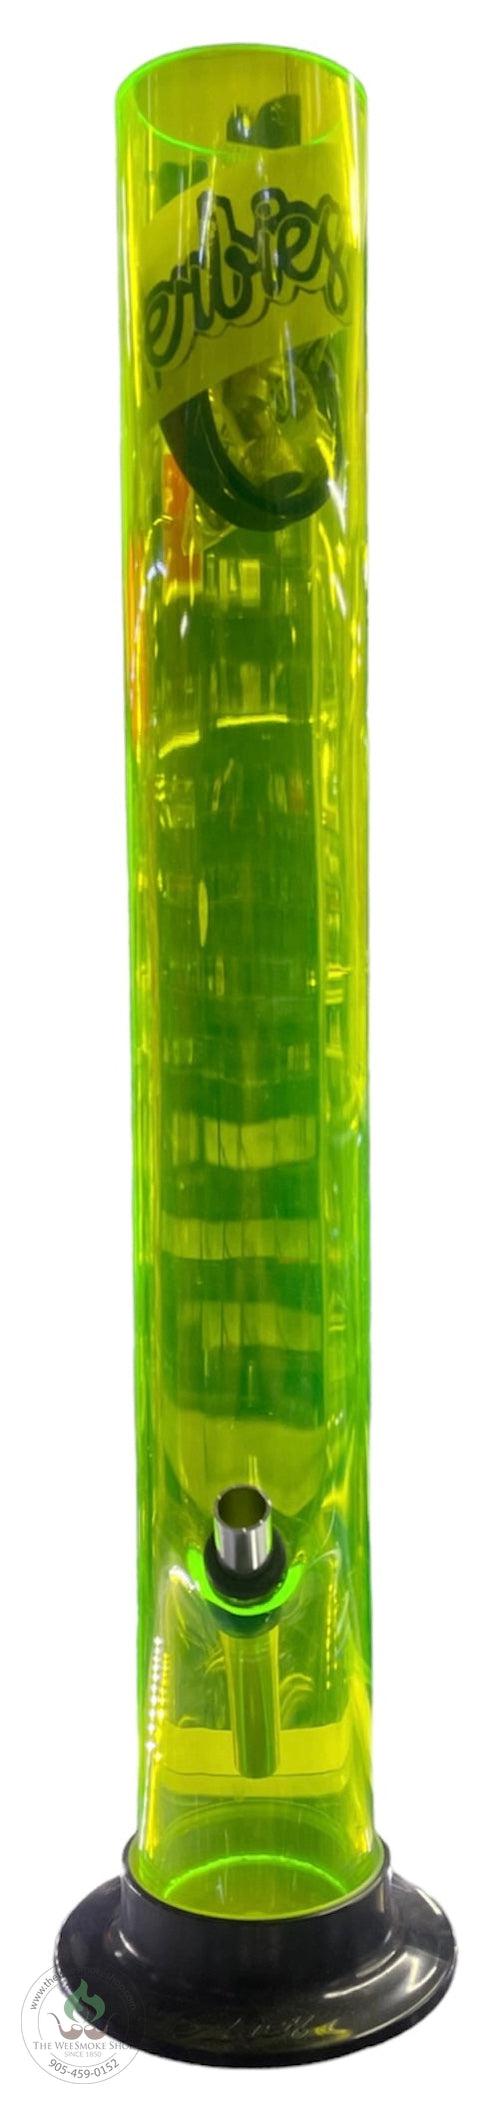 Herbies 15" Acrylic Straight Shooter Bong - Light Green - The Wee Smoke Shop